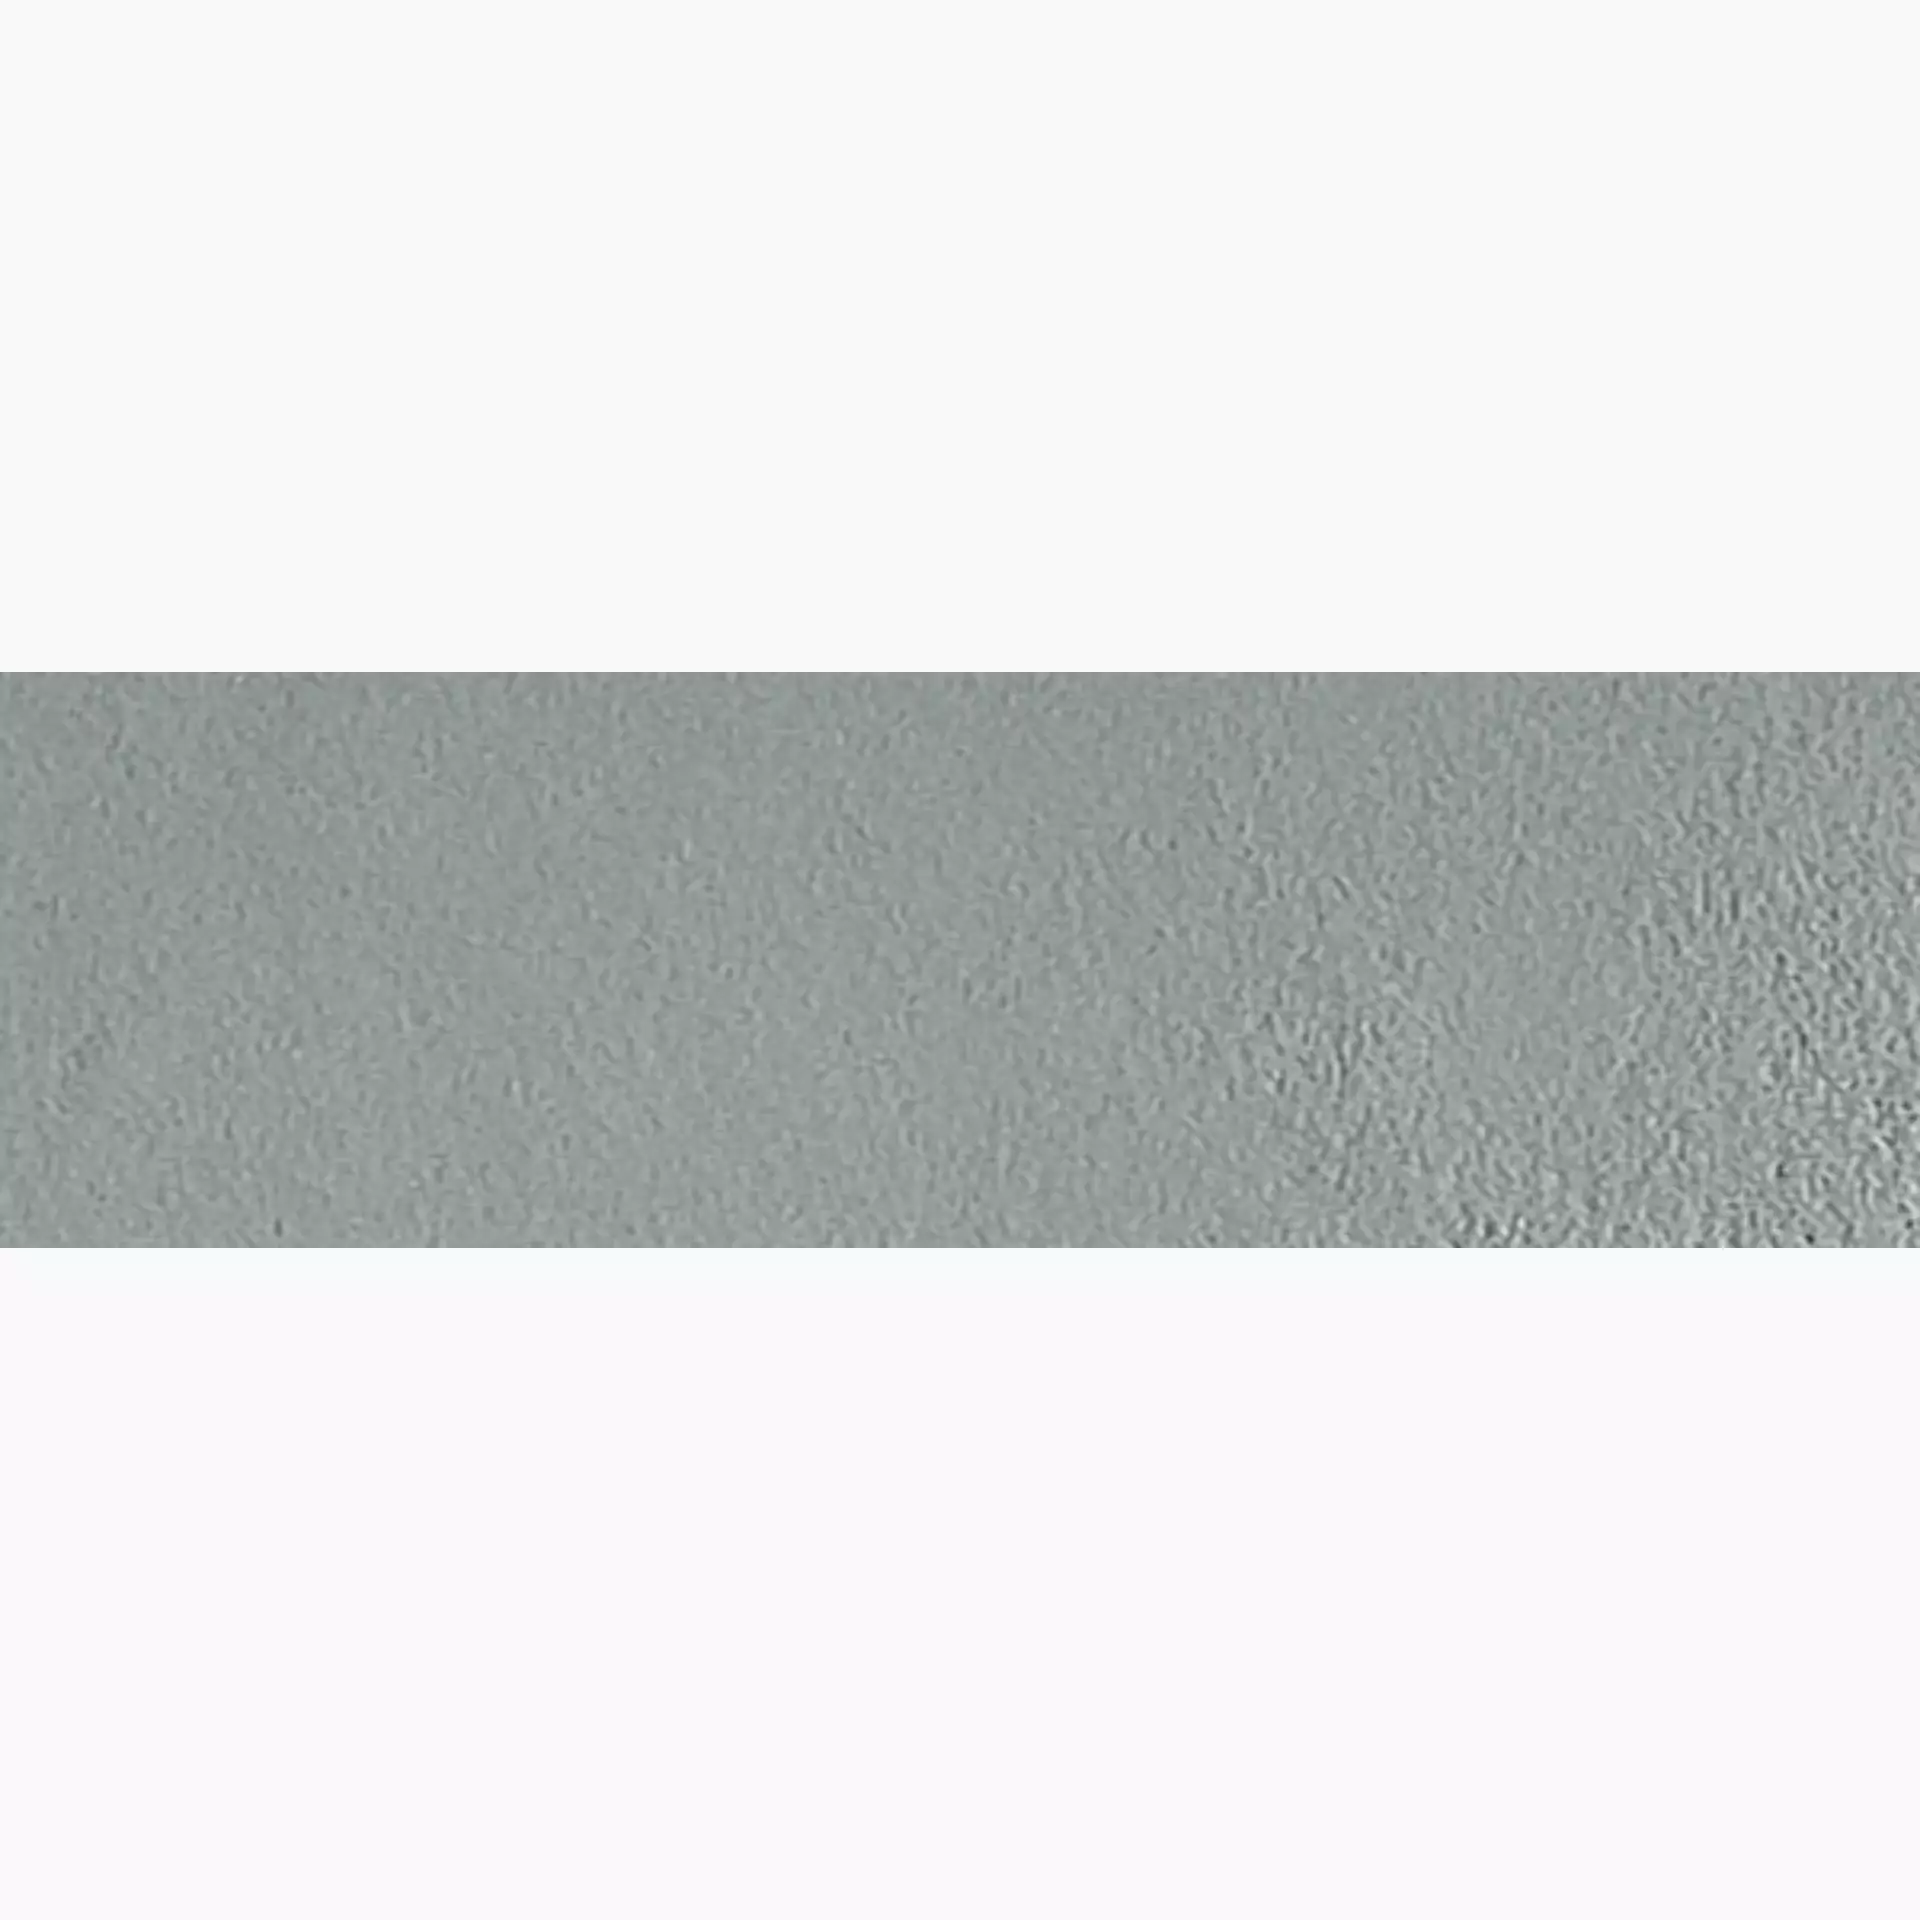 Gigacer Argilla Marine Material Decor Plate PO930PLAMARINE 9x30cm 6mm